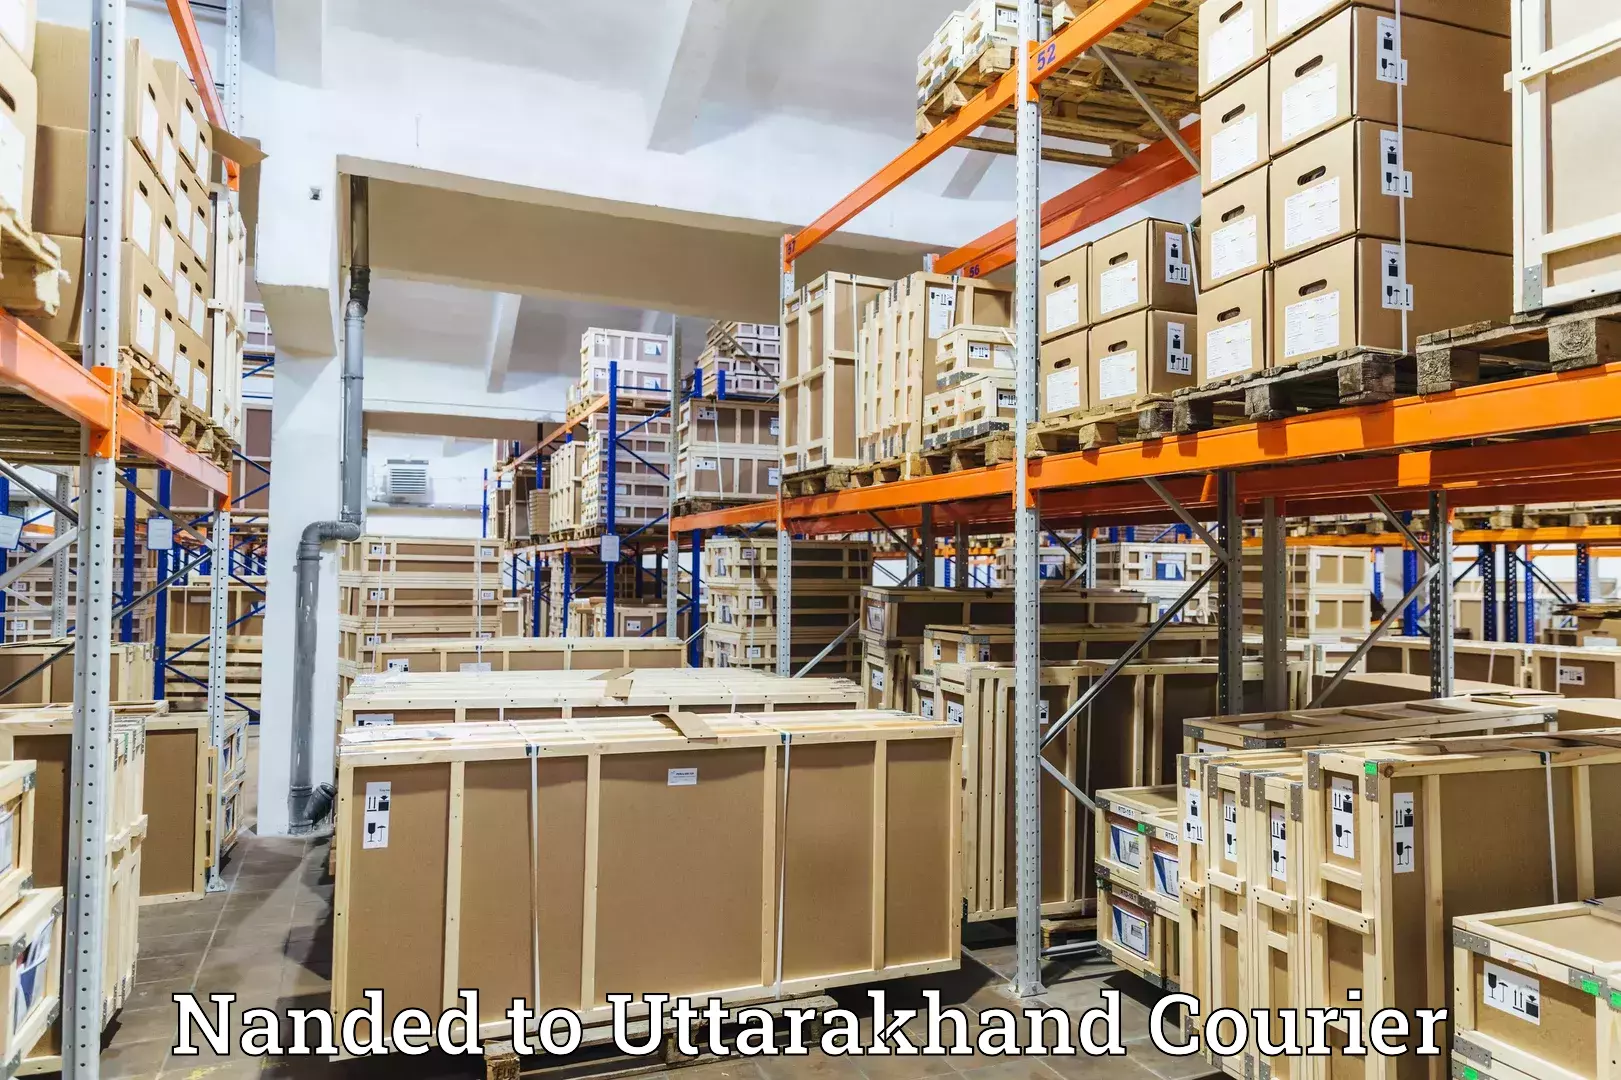 Doorstep delivery service Nanded to Dehradun